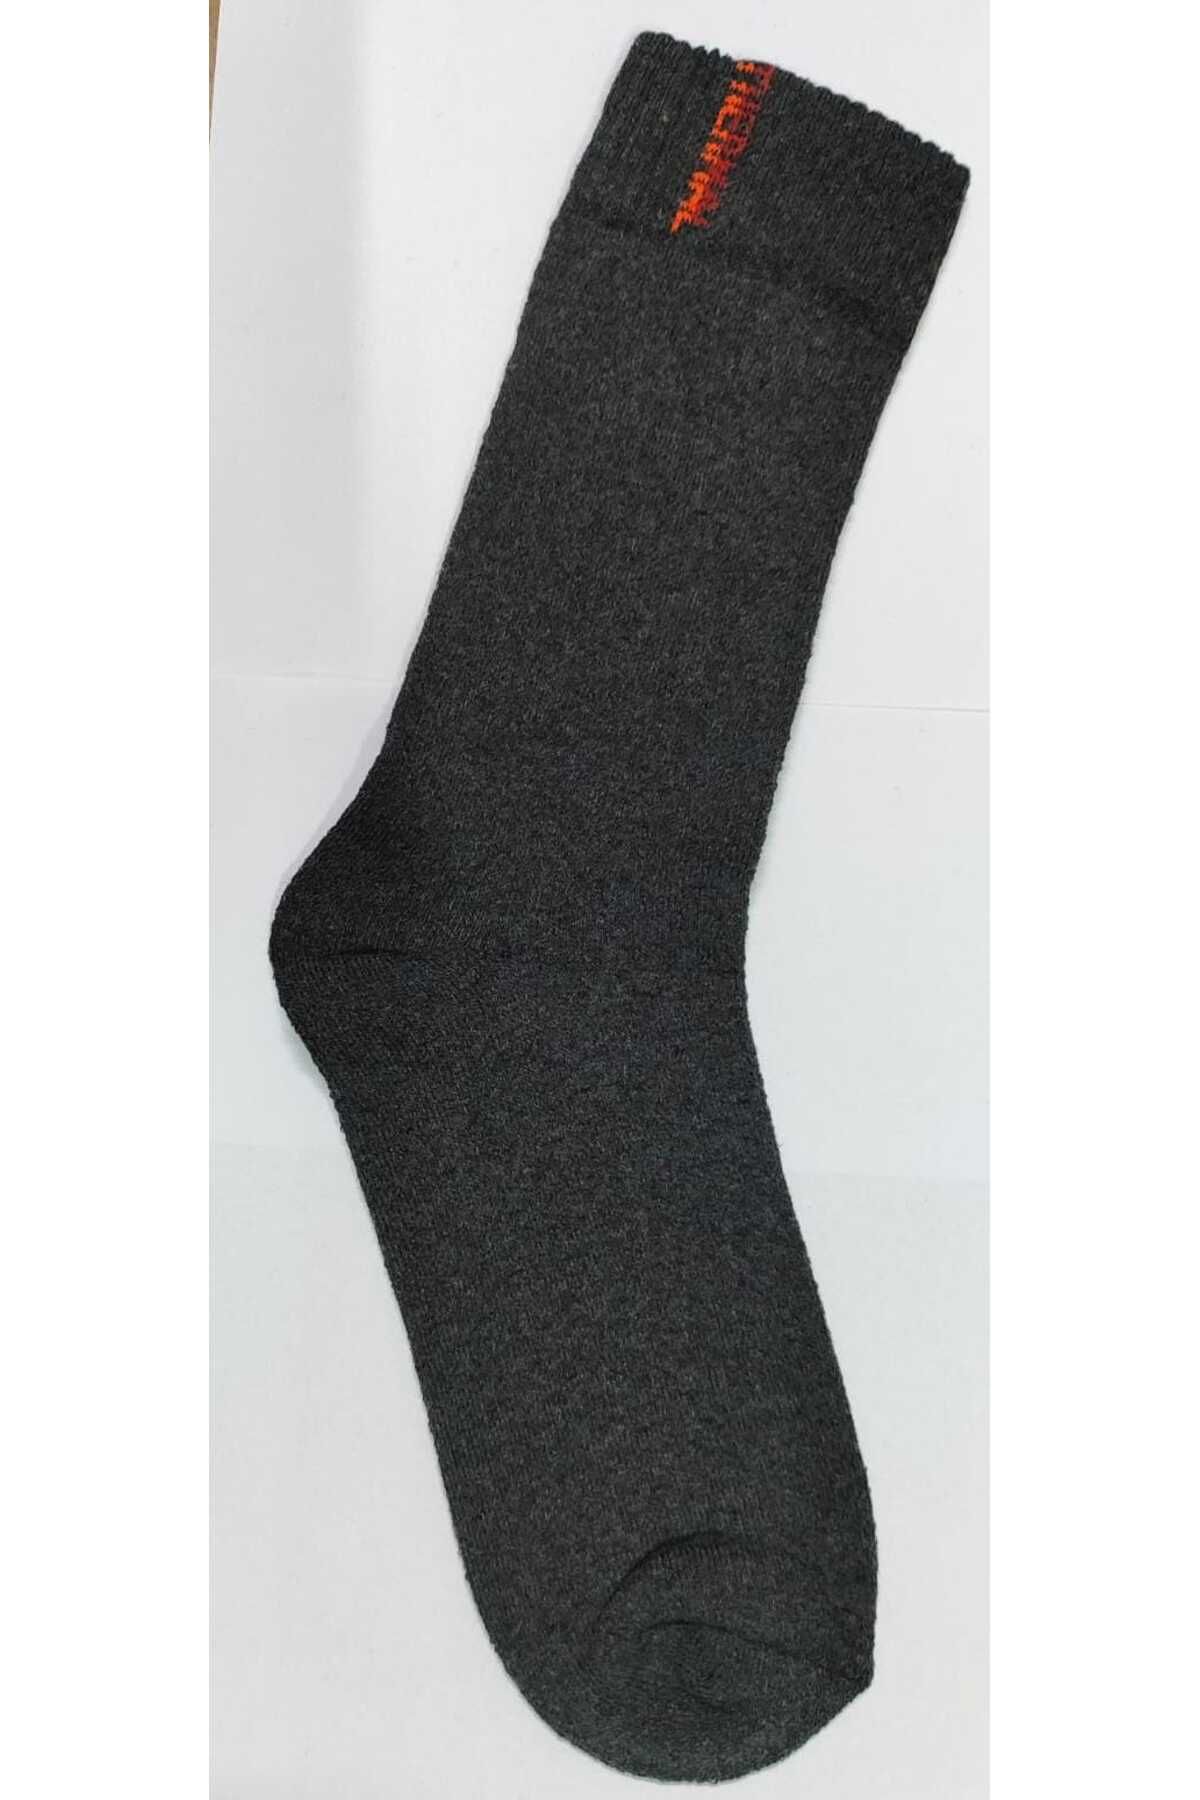 GÜÇLÜ 10 Lu Thermal Socks Winter Thick Men-women-unisex - Trendyol